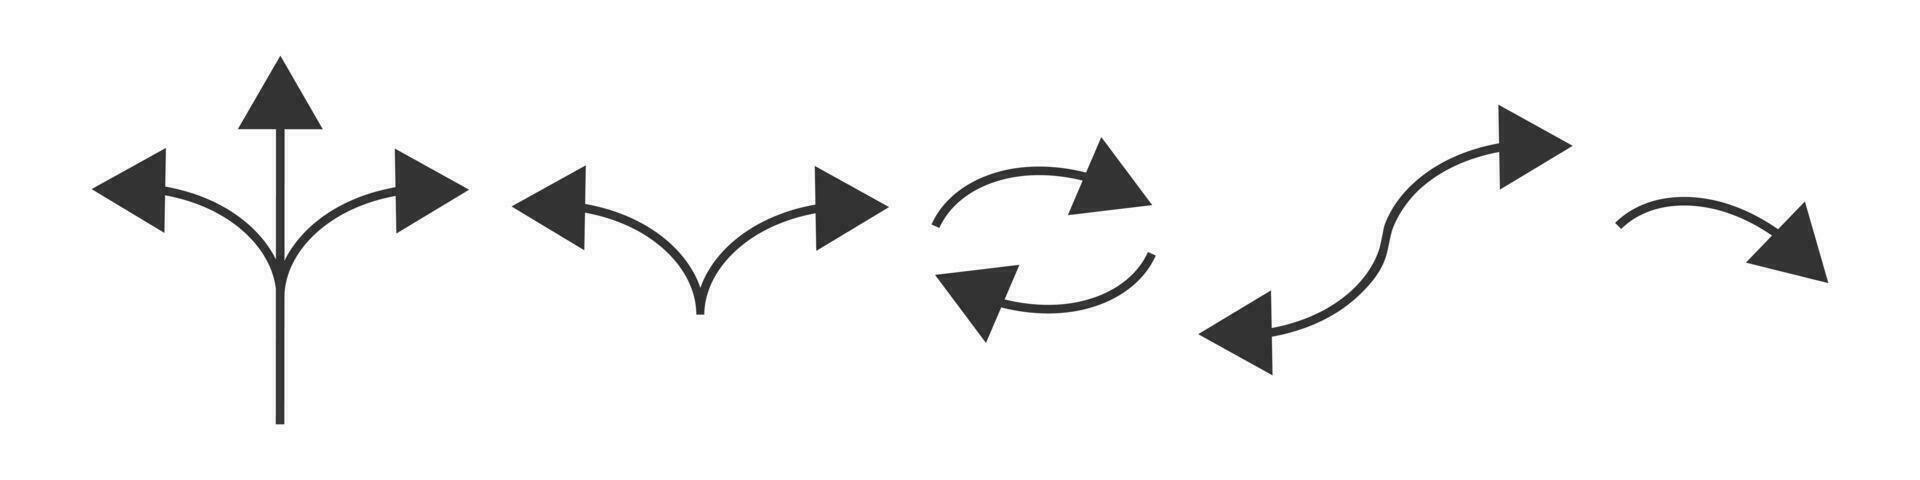 Direction arrow icon set. Road way mark symbol. Sign pointing path vector. vector